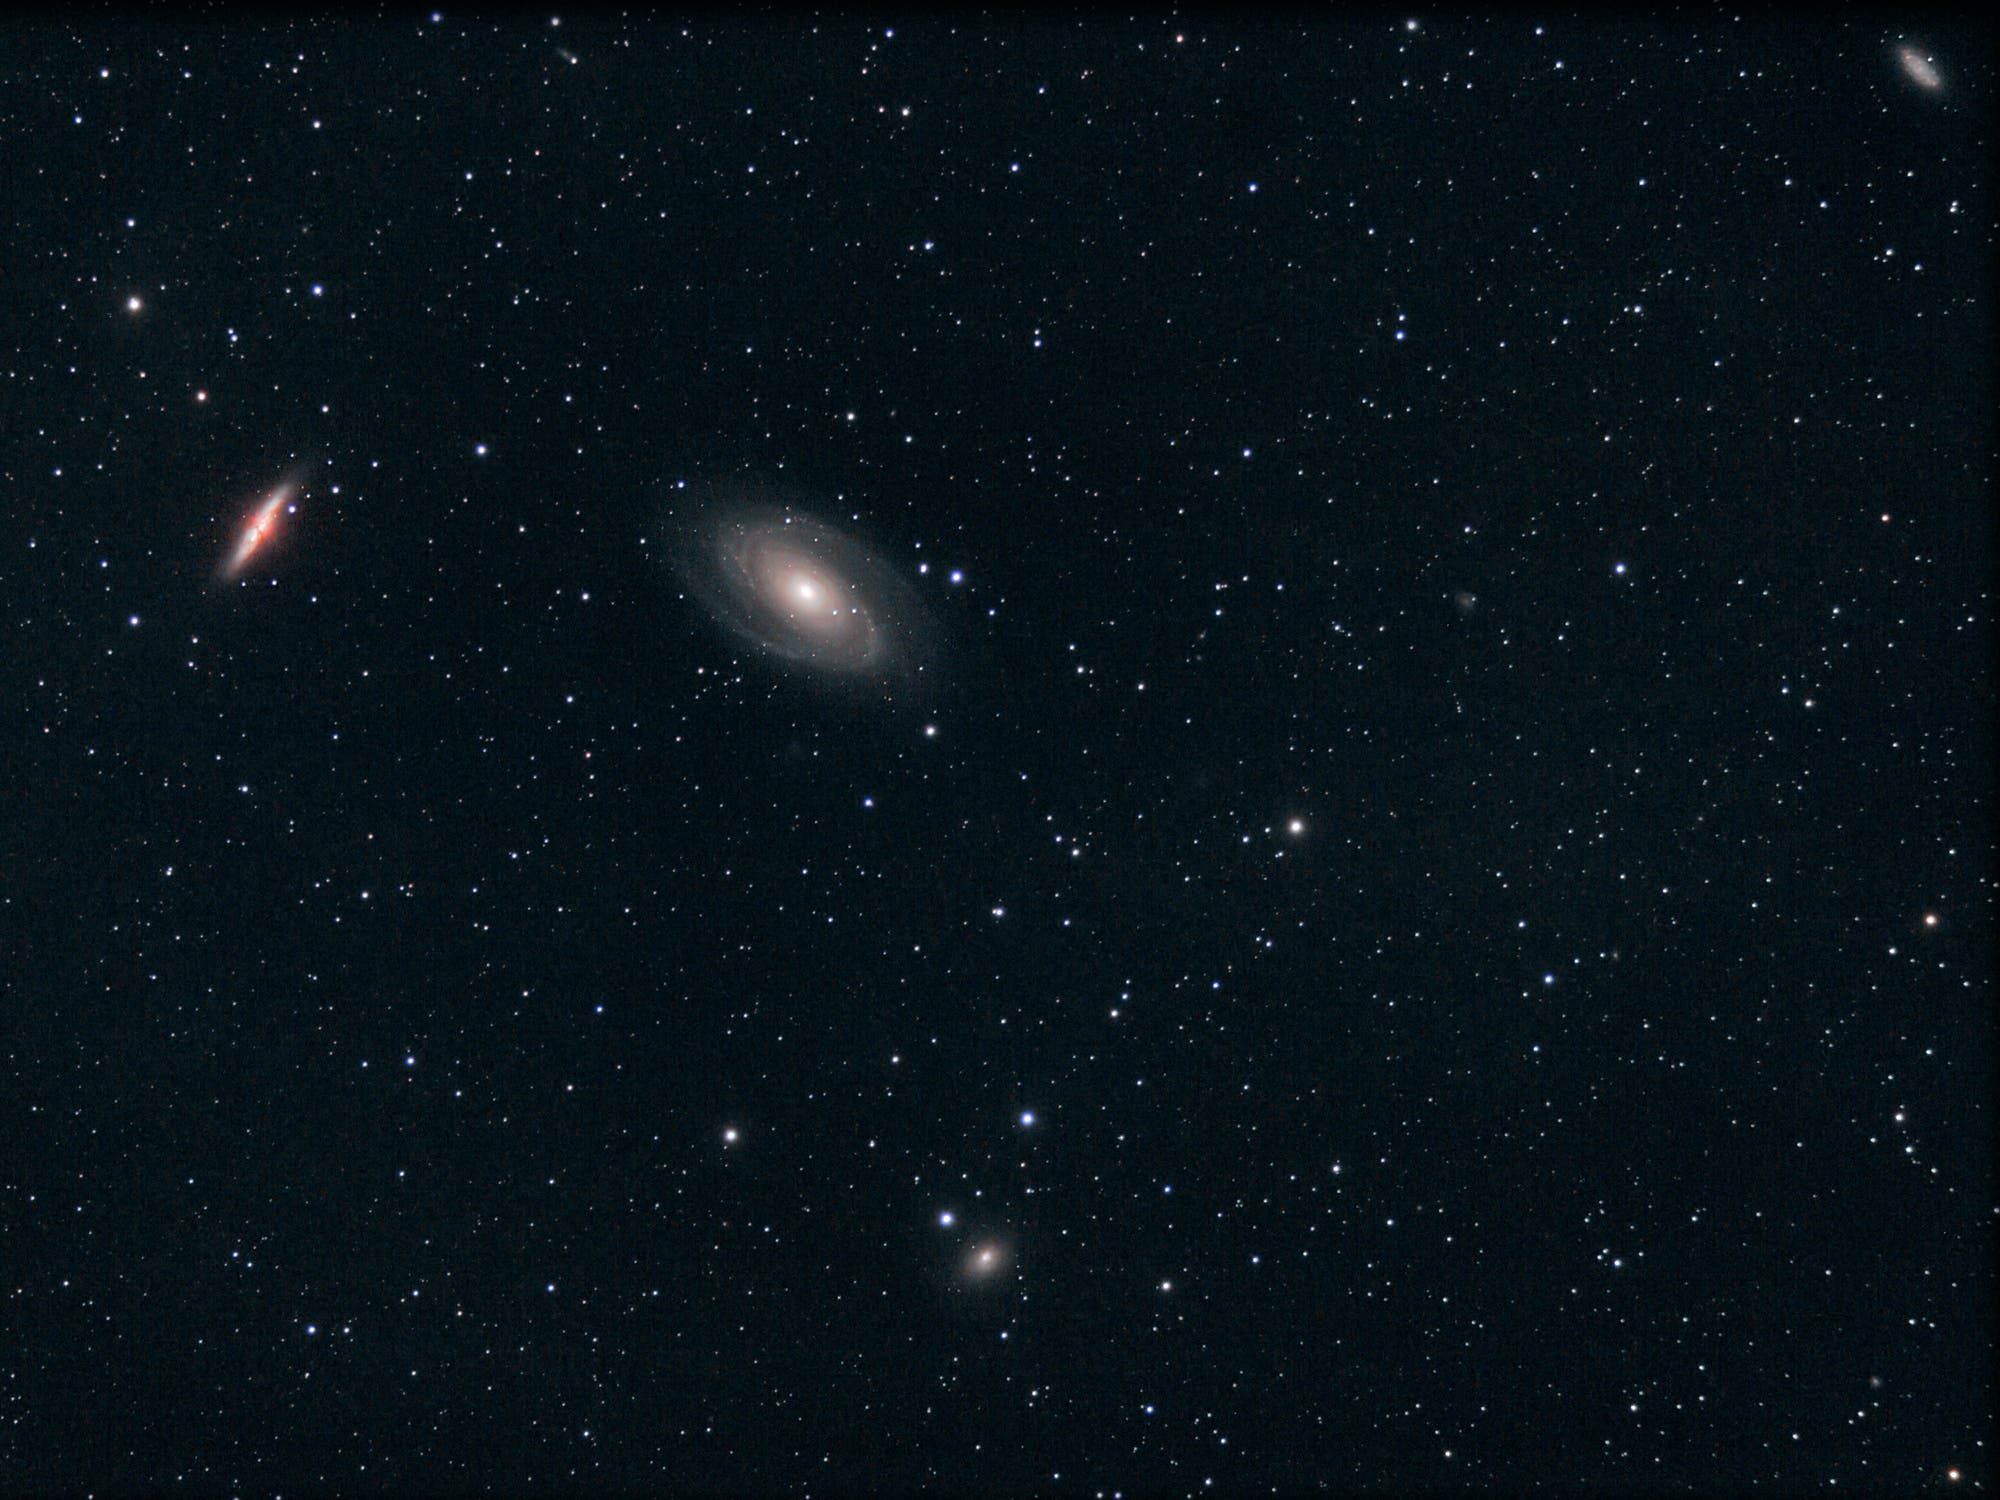 M81-Galaxiengruppe im Großen Bär